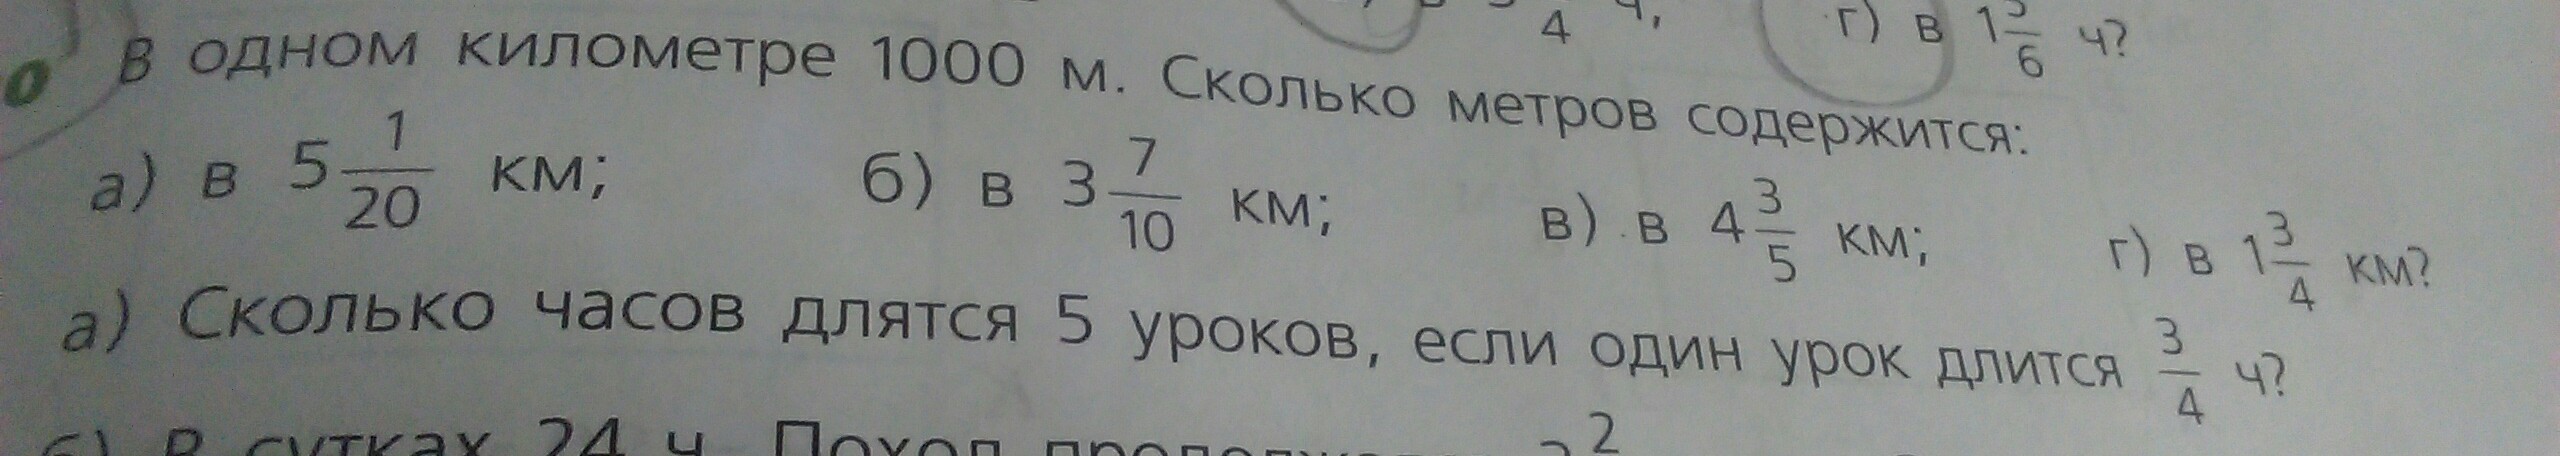 7 км 35 м